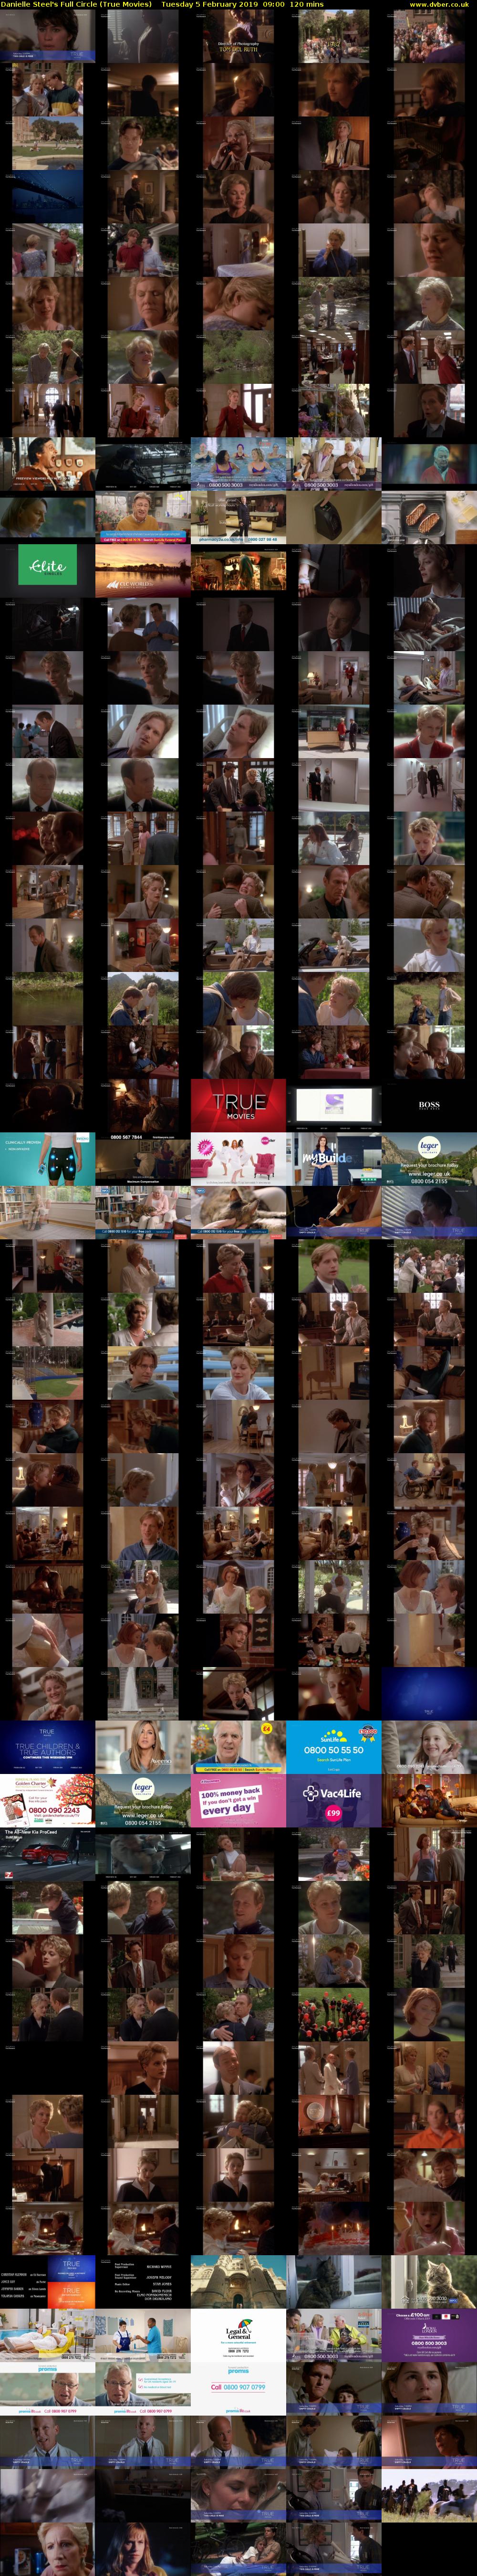 Danielle Steel's Full Circle (True Movies) Tuesday 5 February 2019 09:00 - 11:00